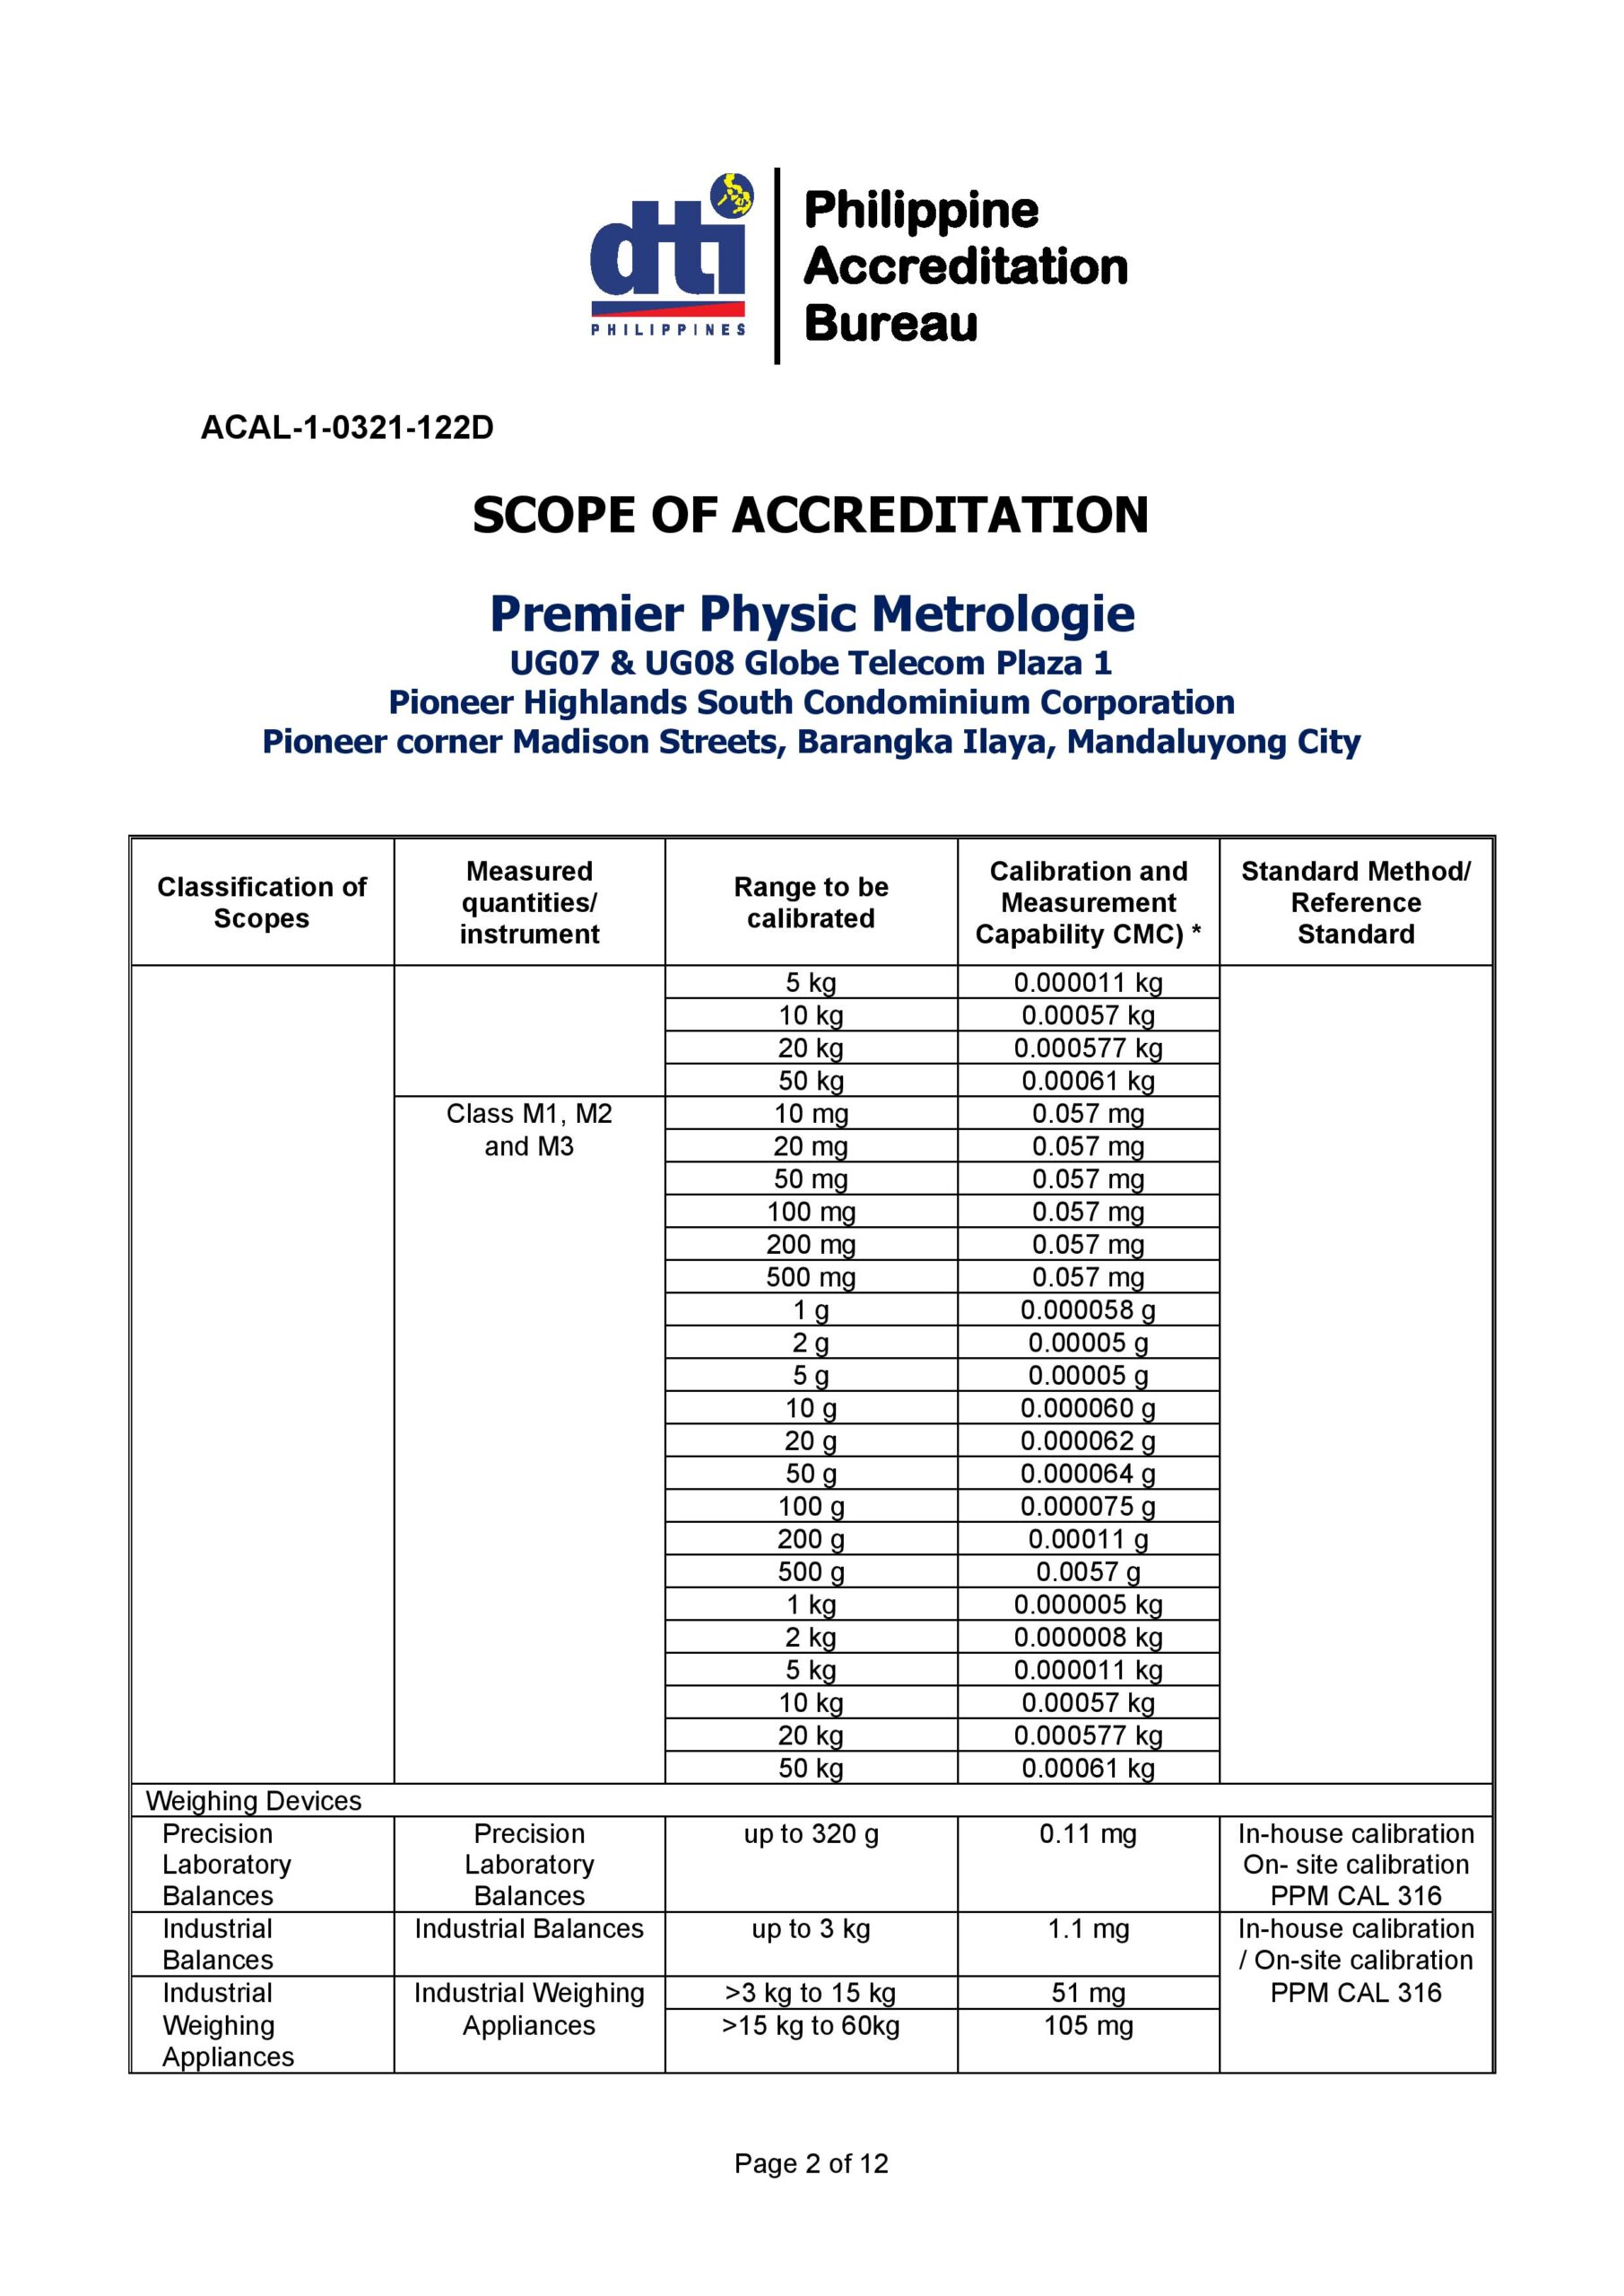 Premier Physic Metrologie - Scope of Accreditation 2